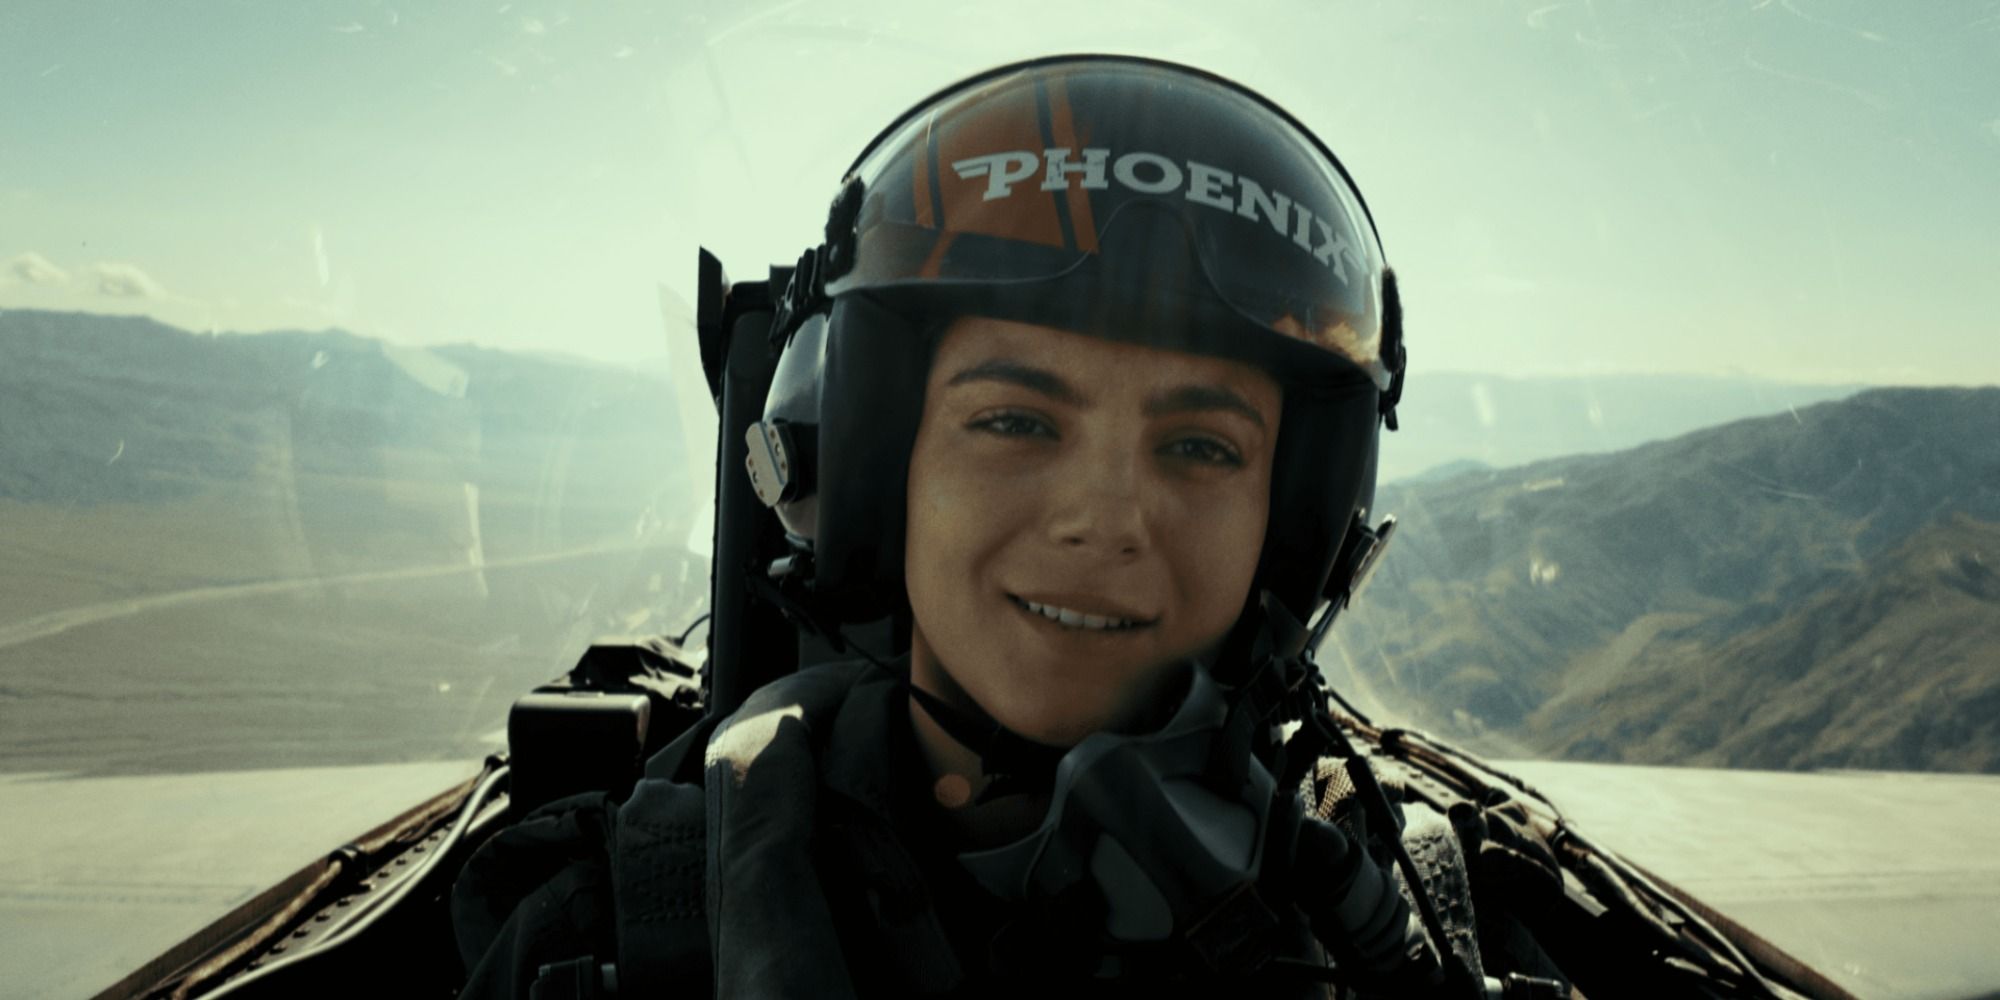 Monica Barbaro as Phoenix in the cockpit 